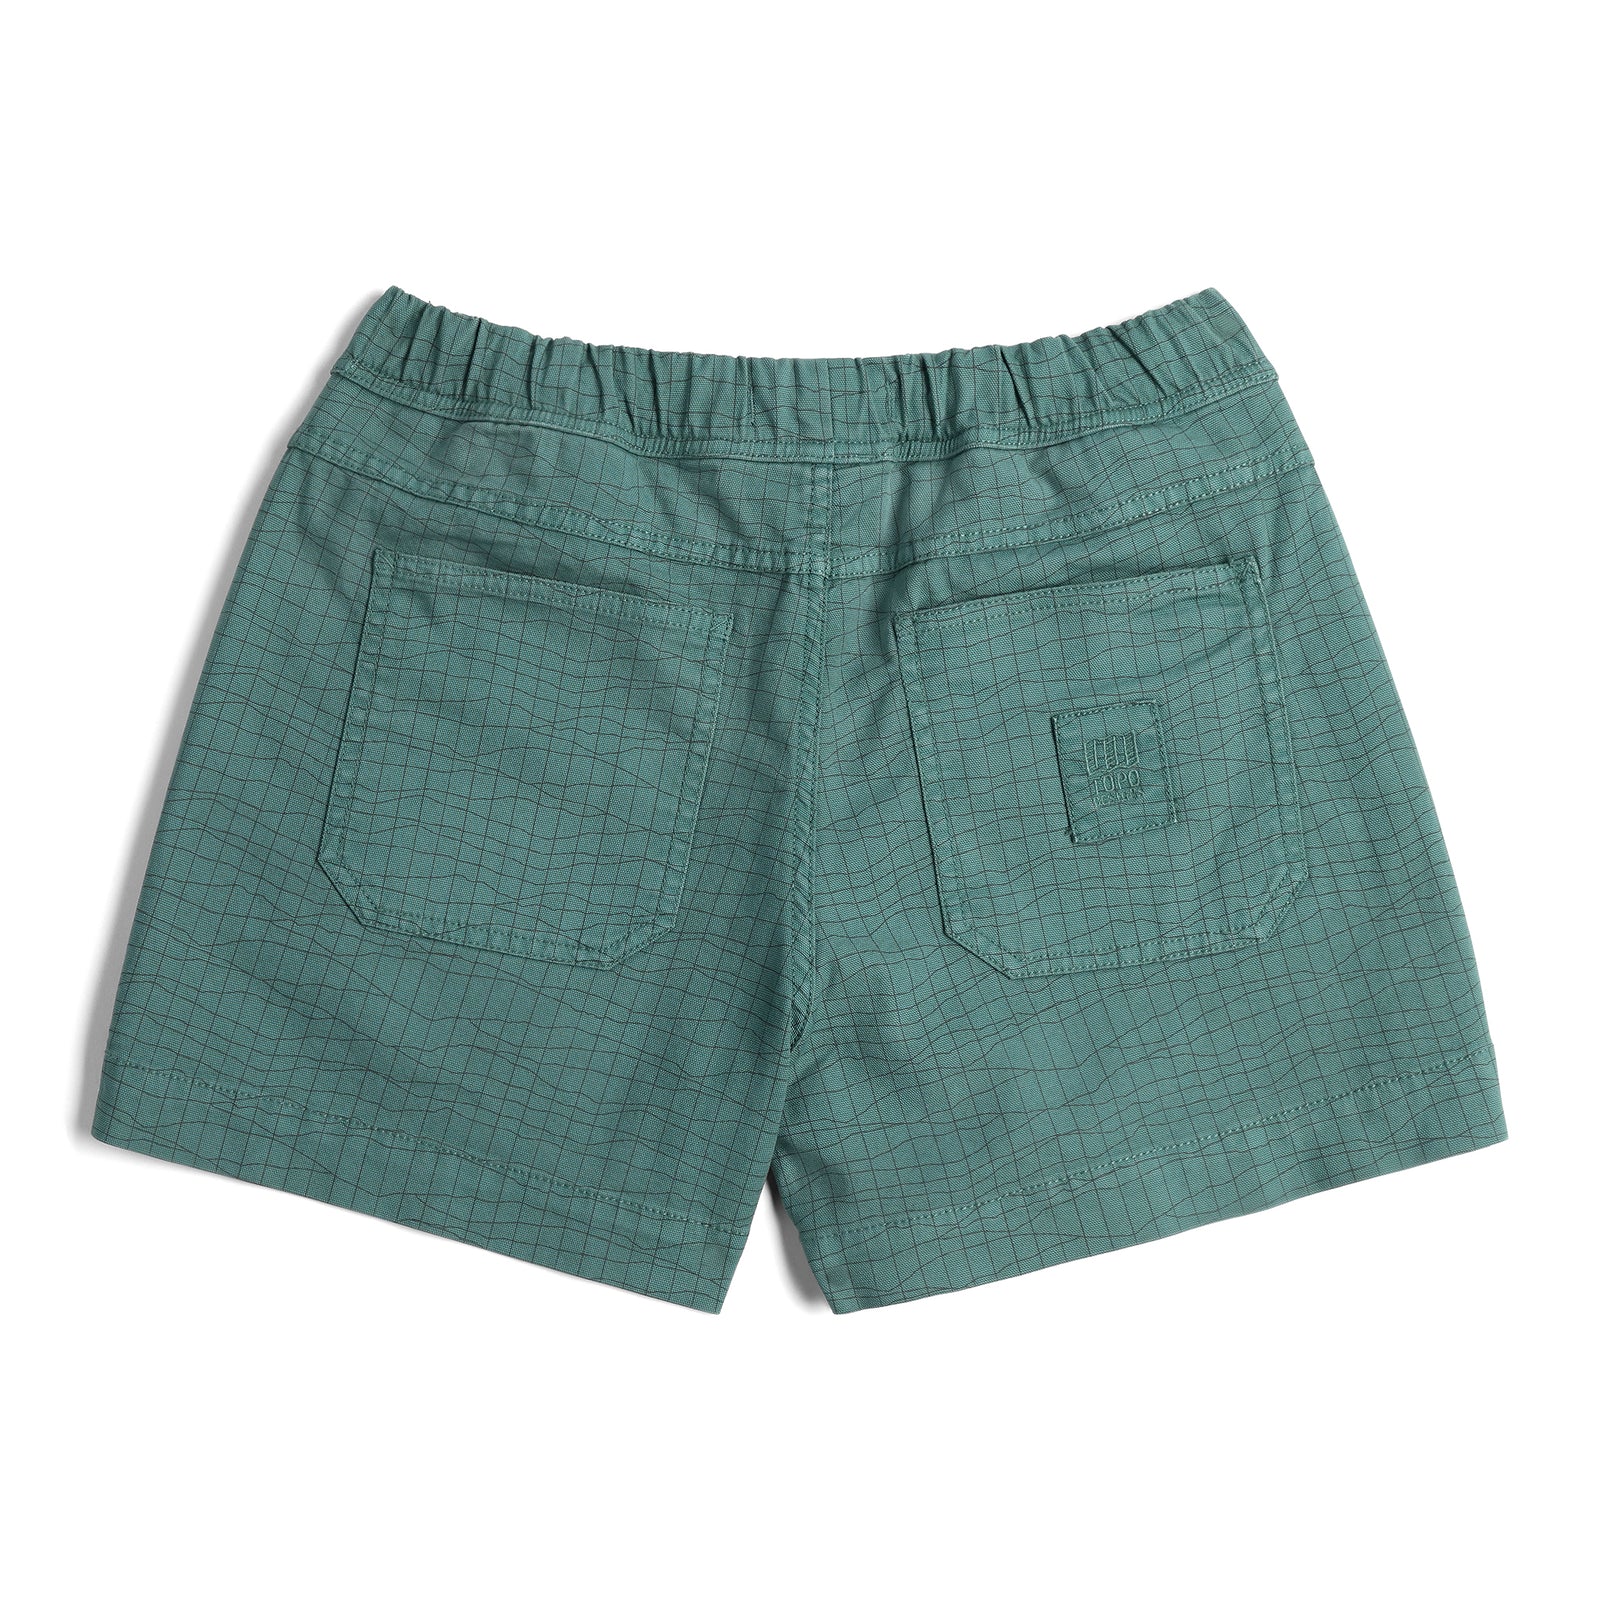 Back View of Topo Designs Dirt Shorts - Women's in "Sea Pine Terrain"